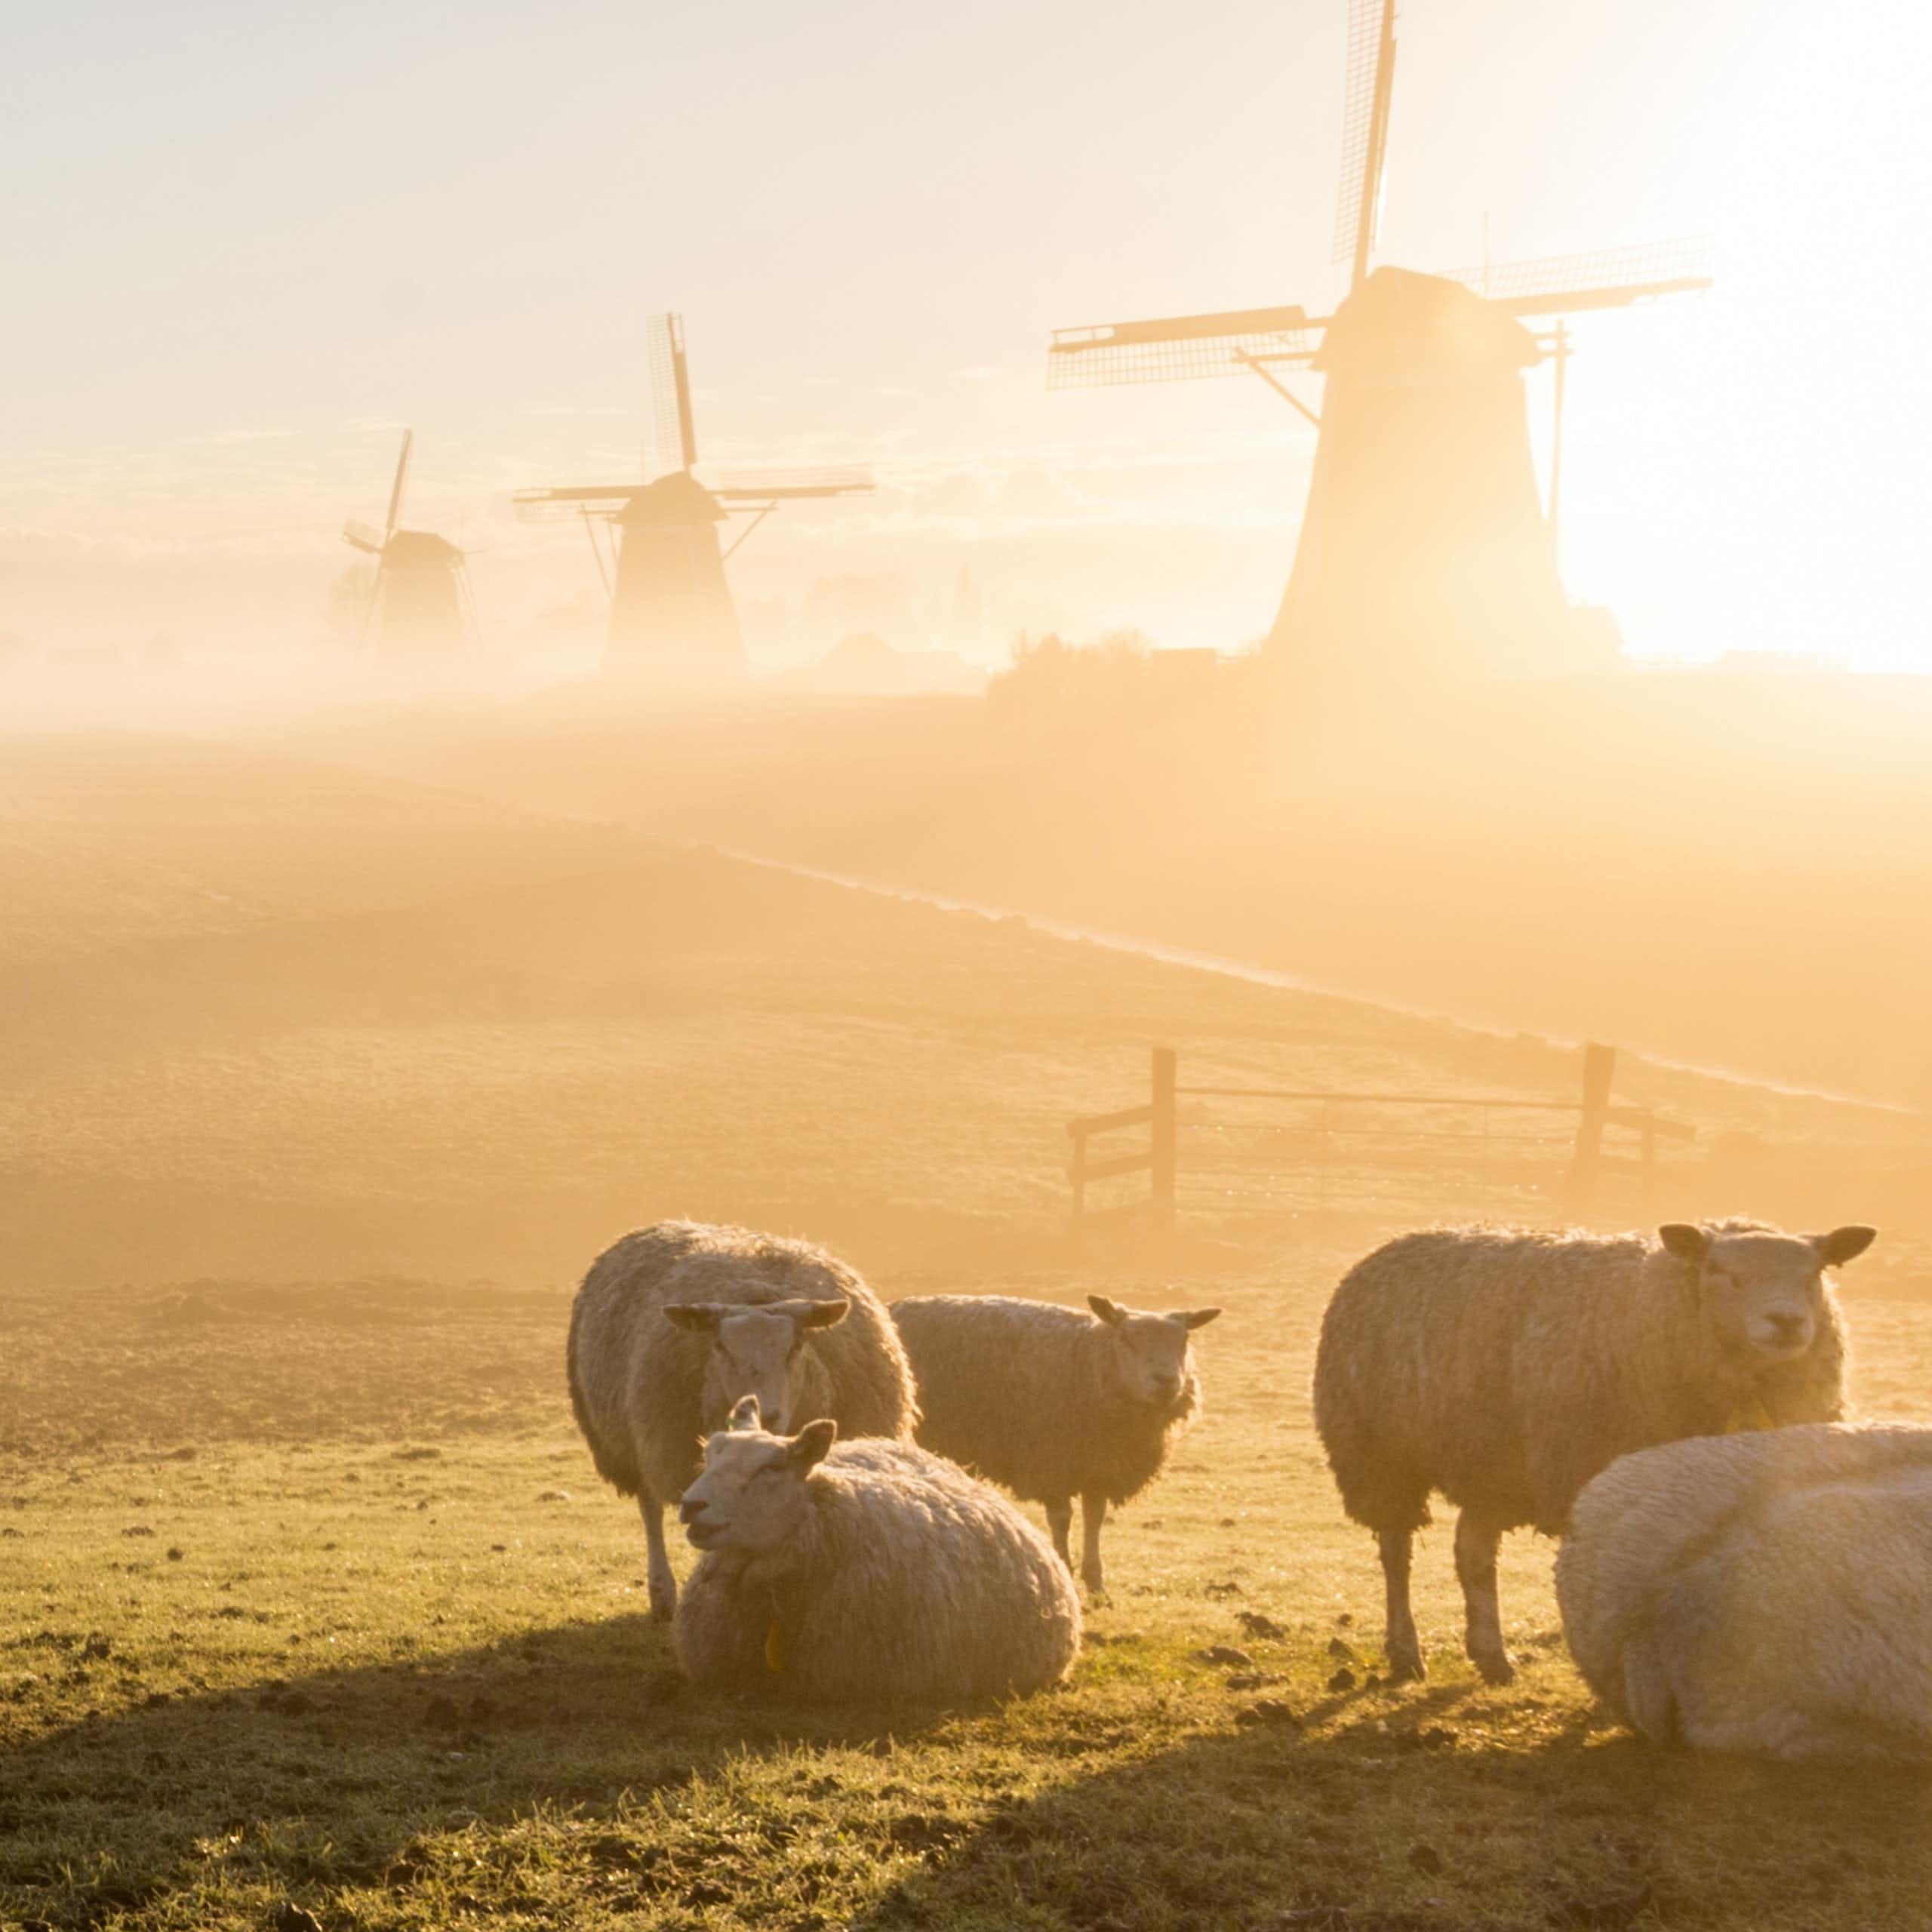 Sheep and windmills